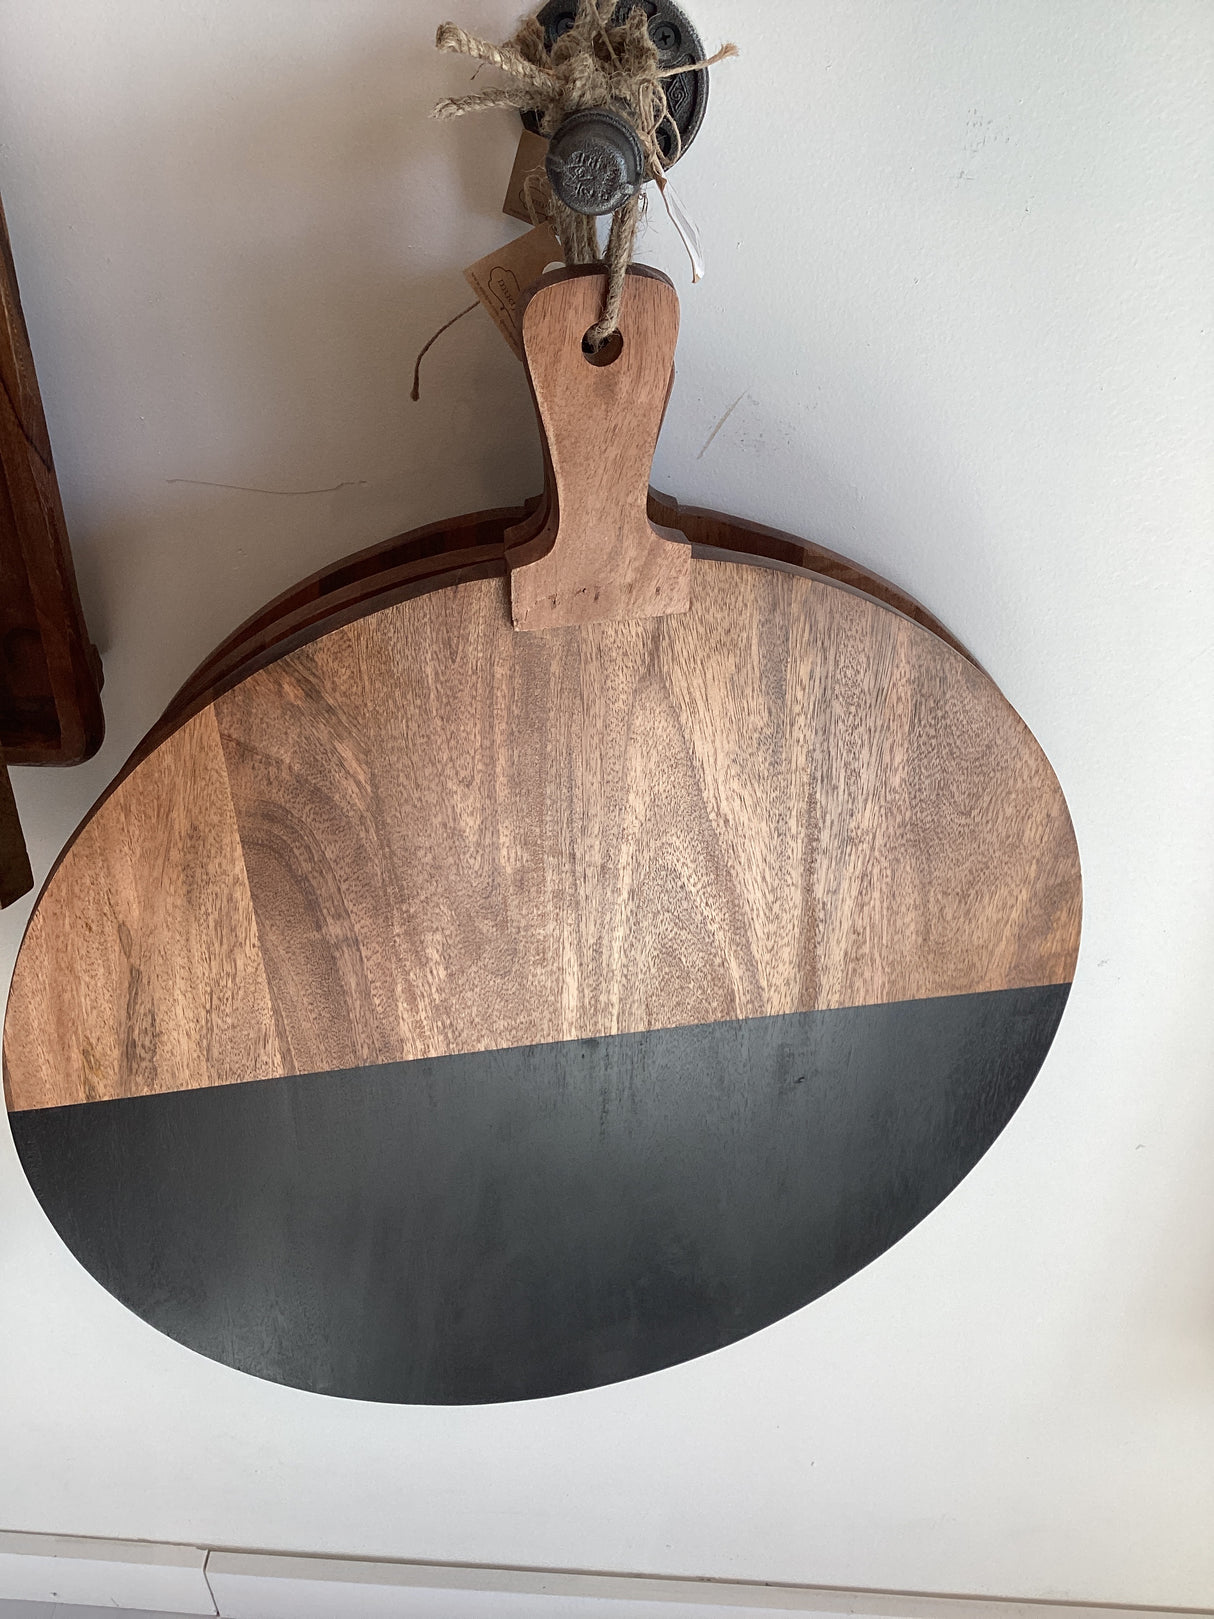 Round Black Wood Board